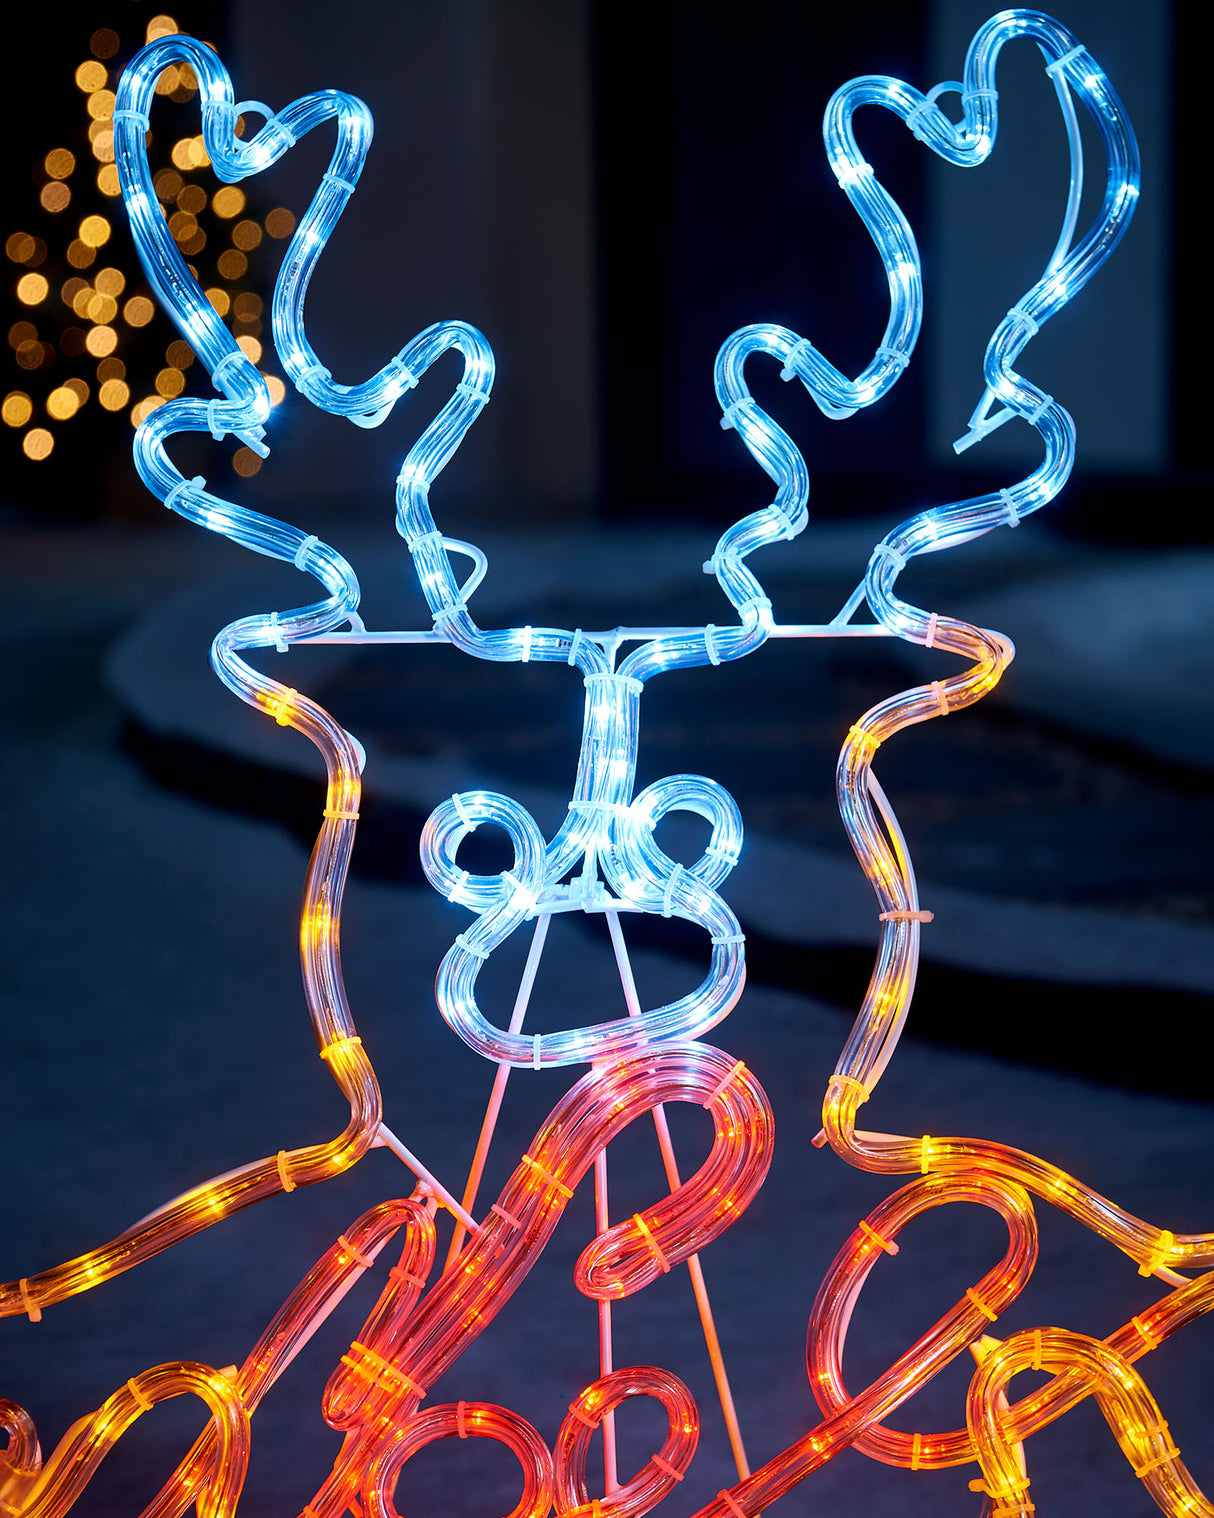 LED Reindeer Rope Light Window Silhouette, 61 cm